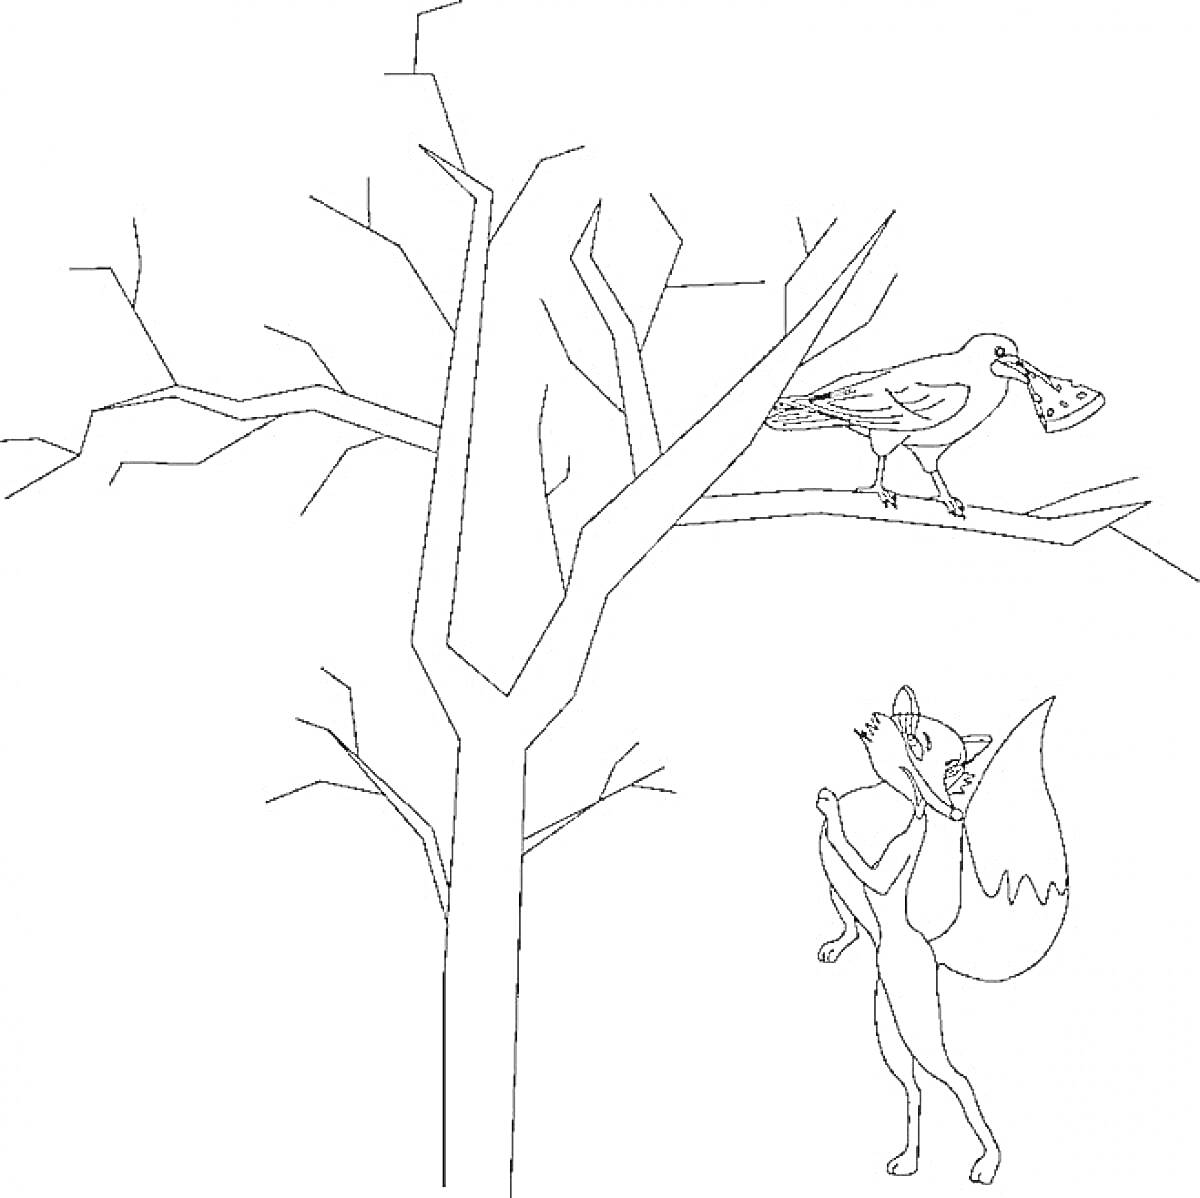 Ворона и Лисица на дереве, Ворона с сыром